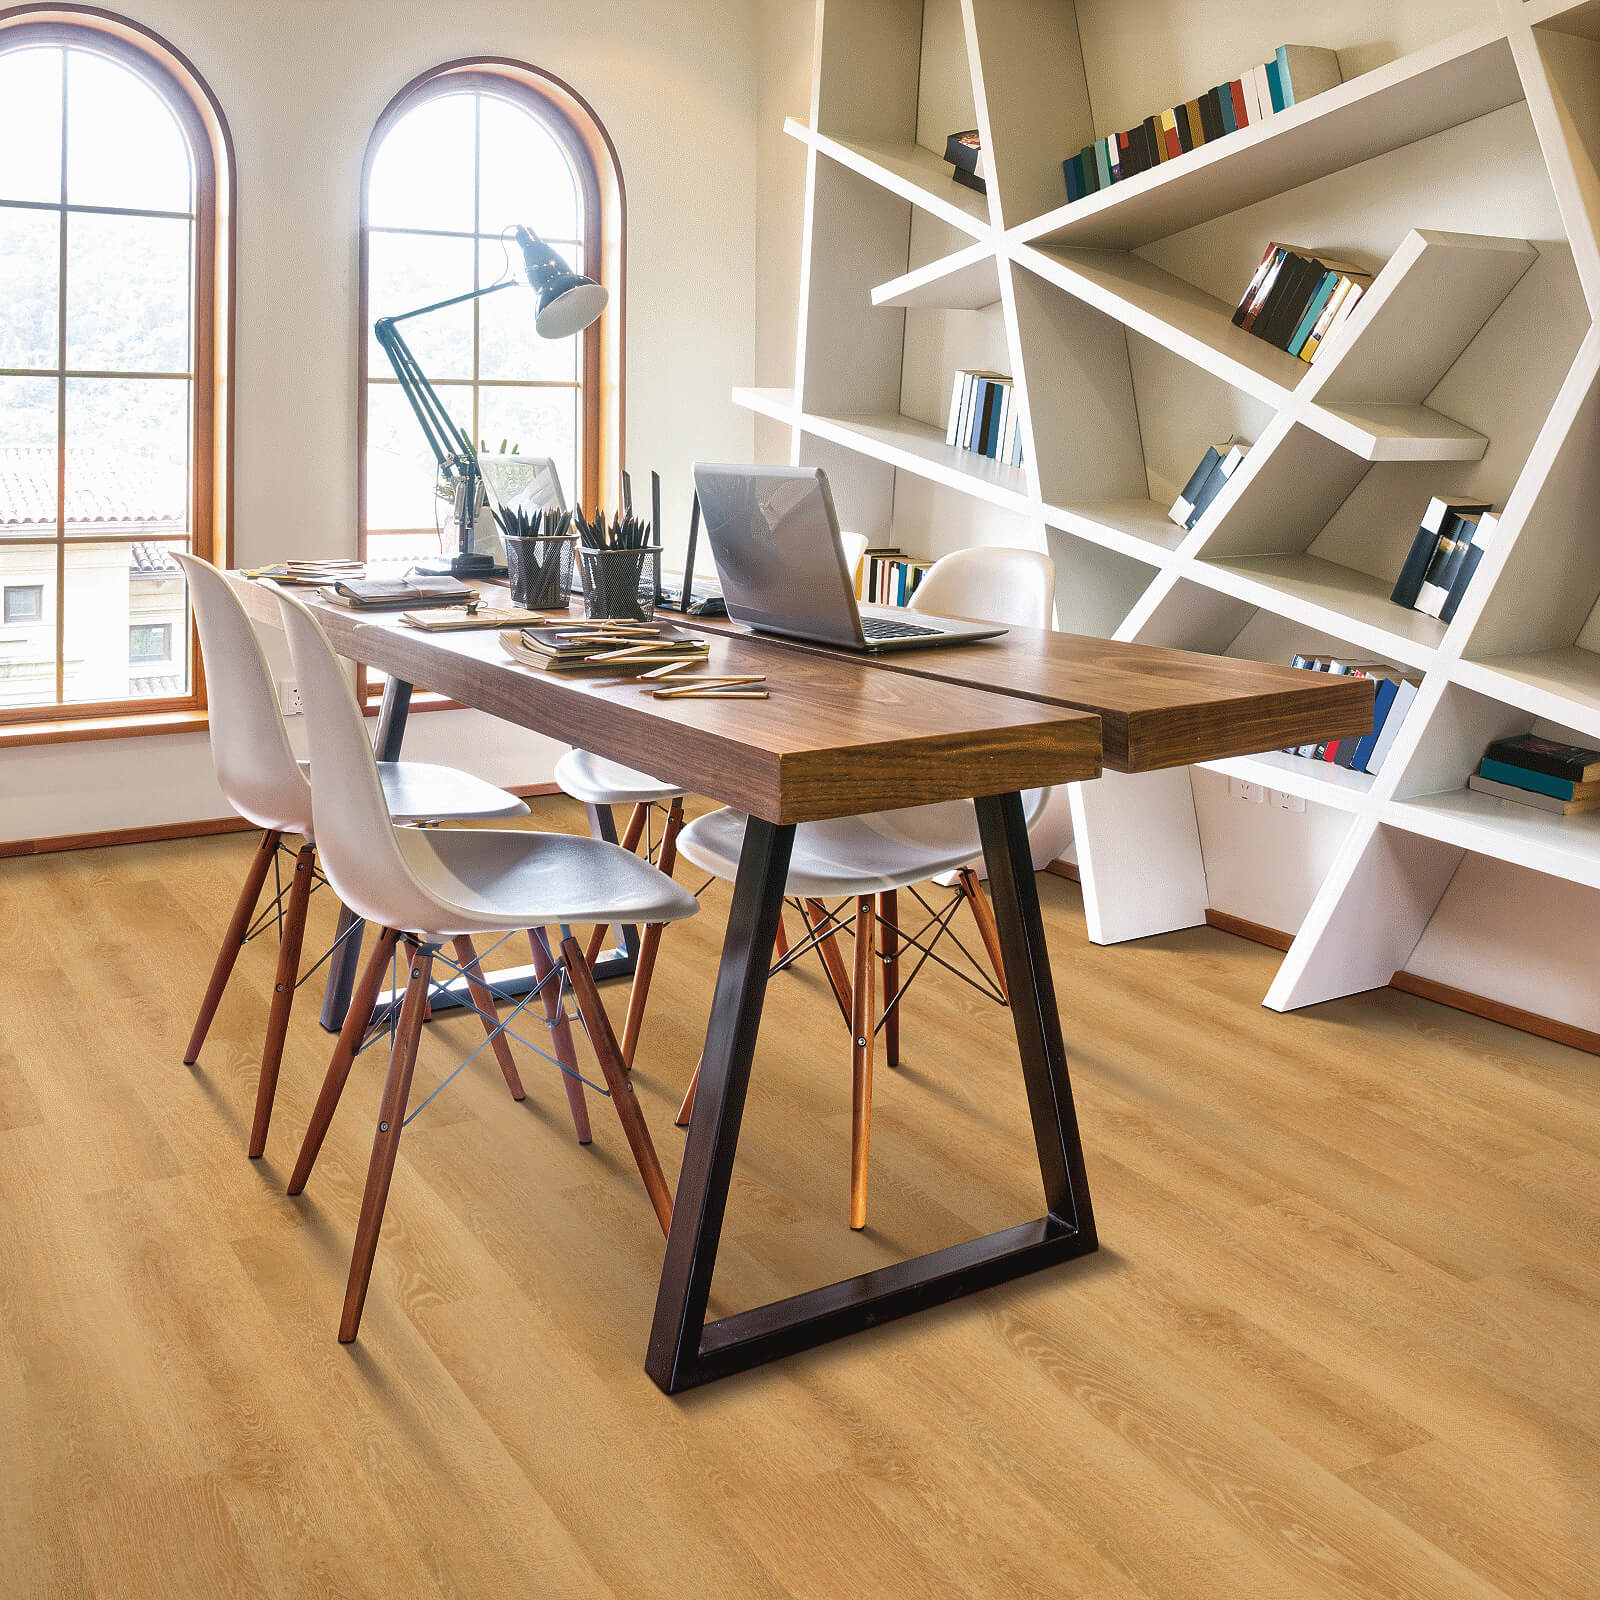 Vinyl flooring for study room | Carpetland USA Granite & Flooring